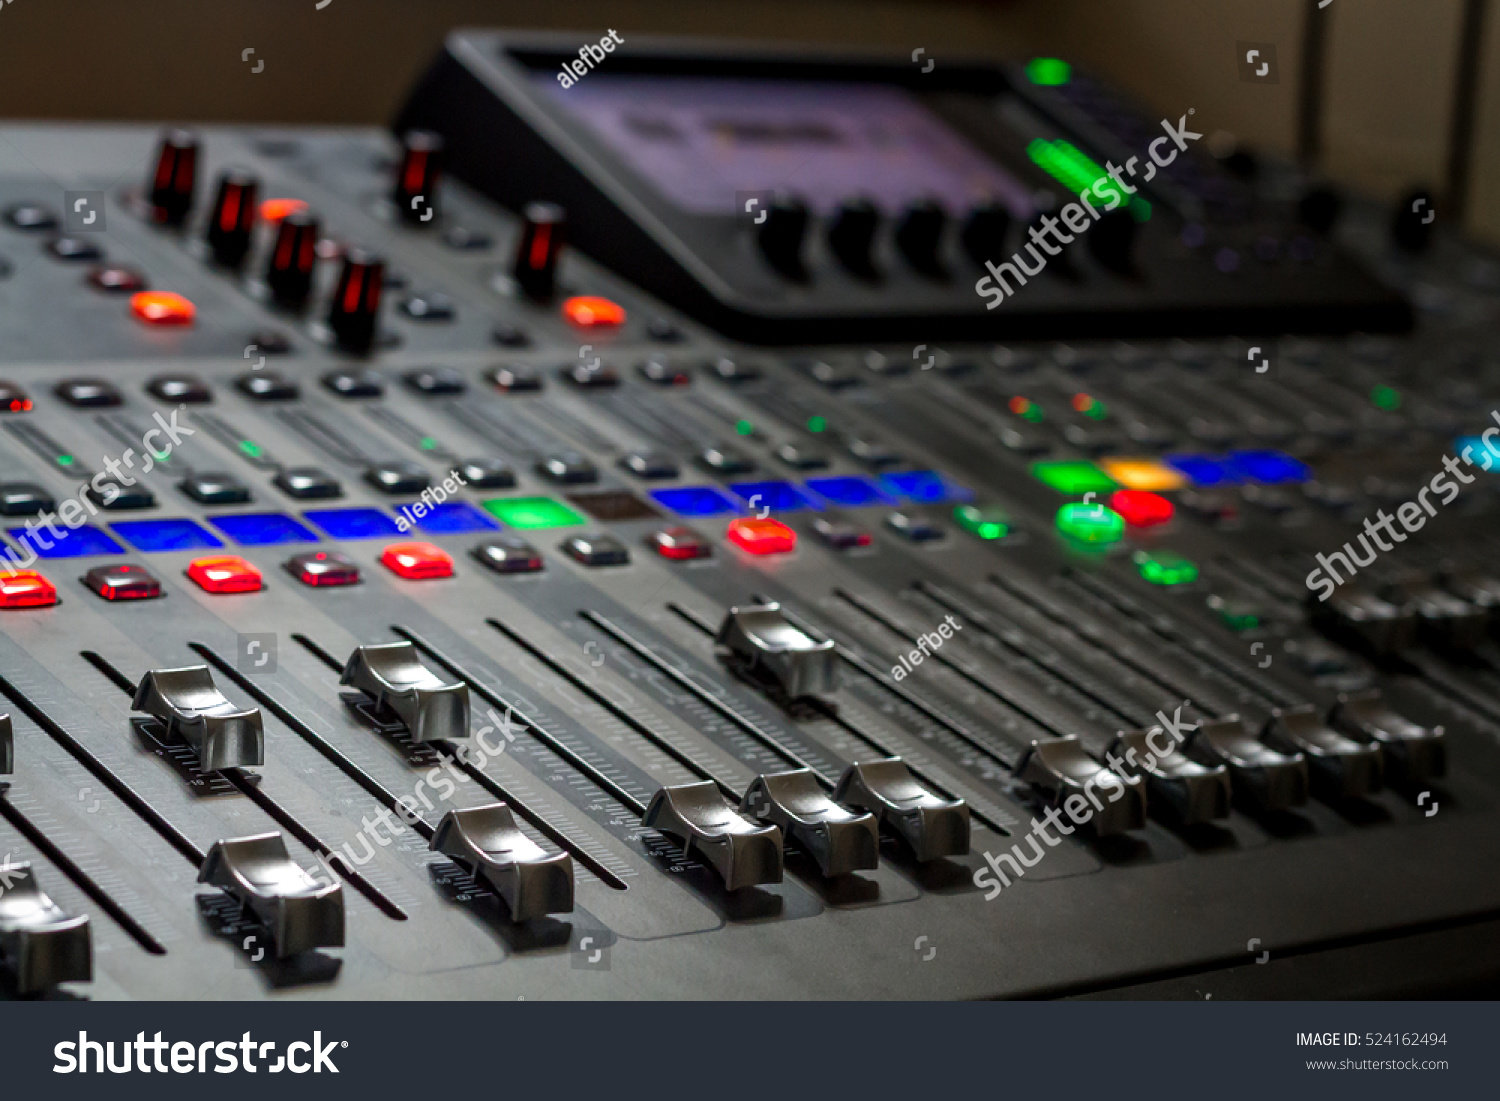 The audio equipment, control panel of digital studio mixer. Close-up, selected focus #524162494